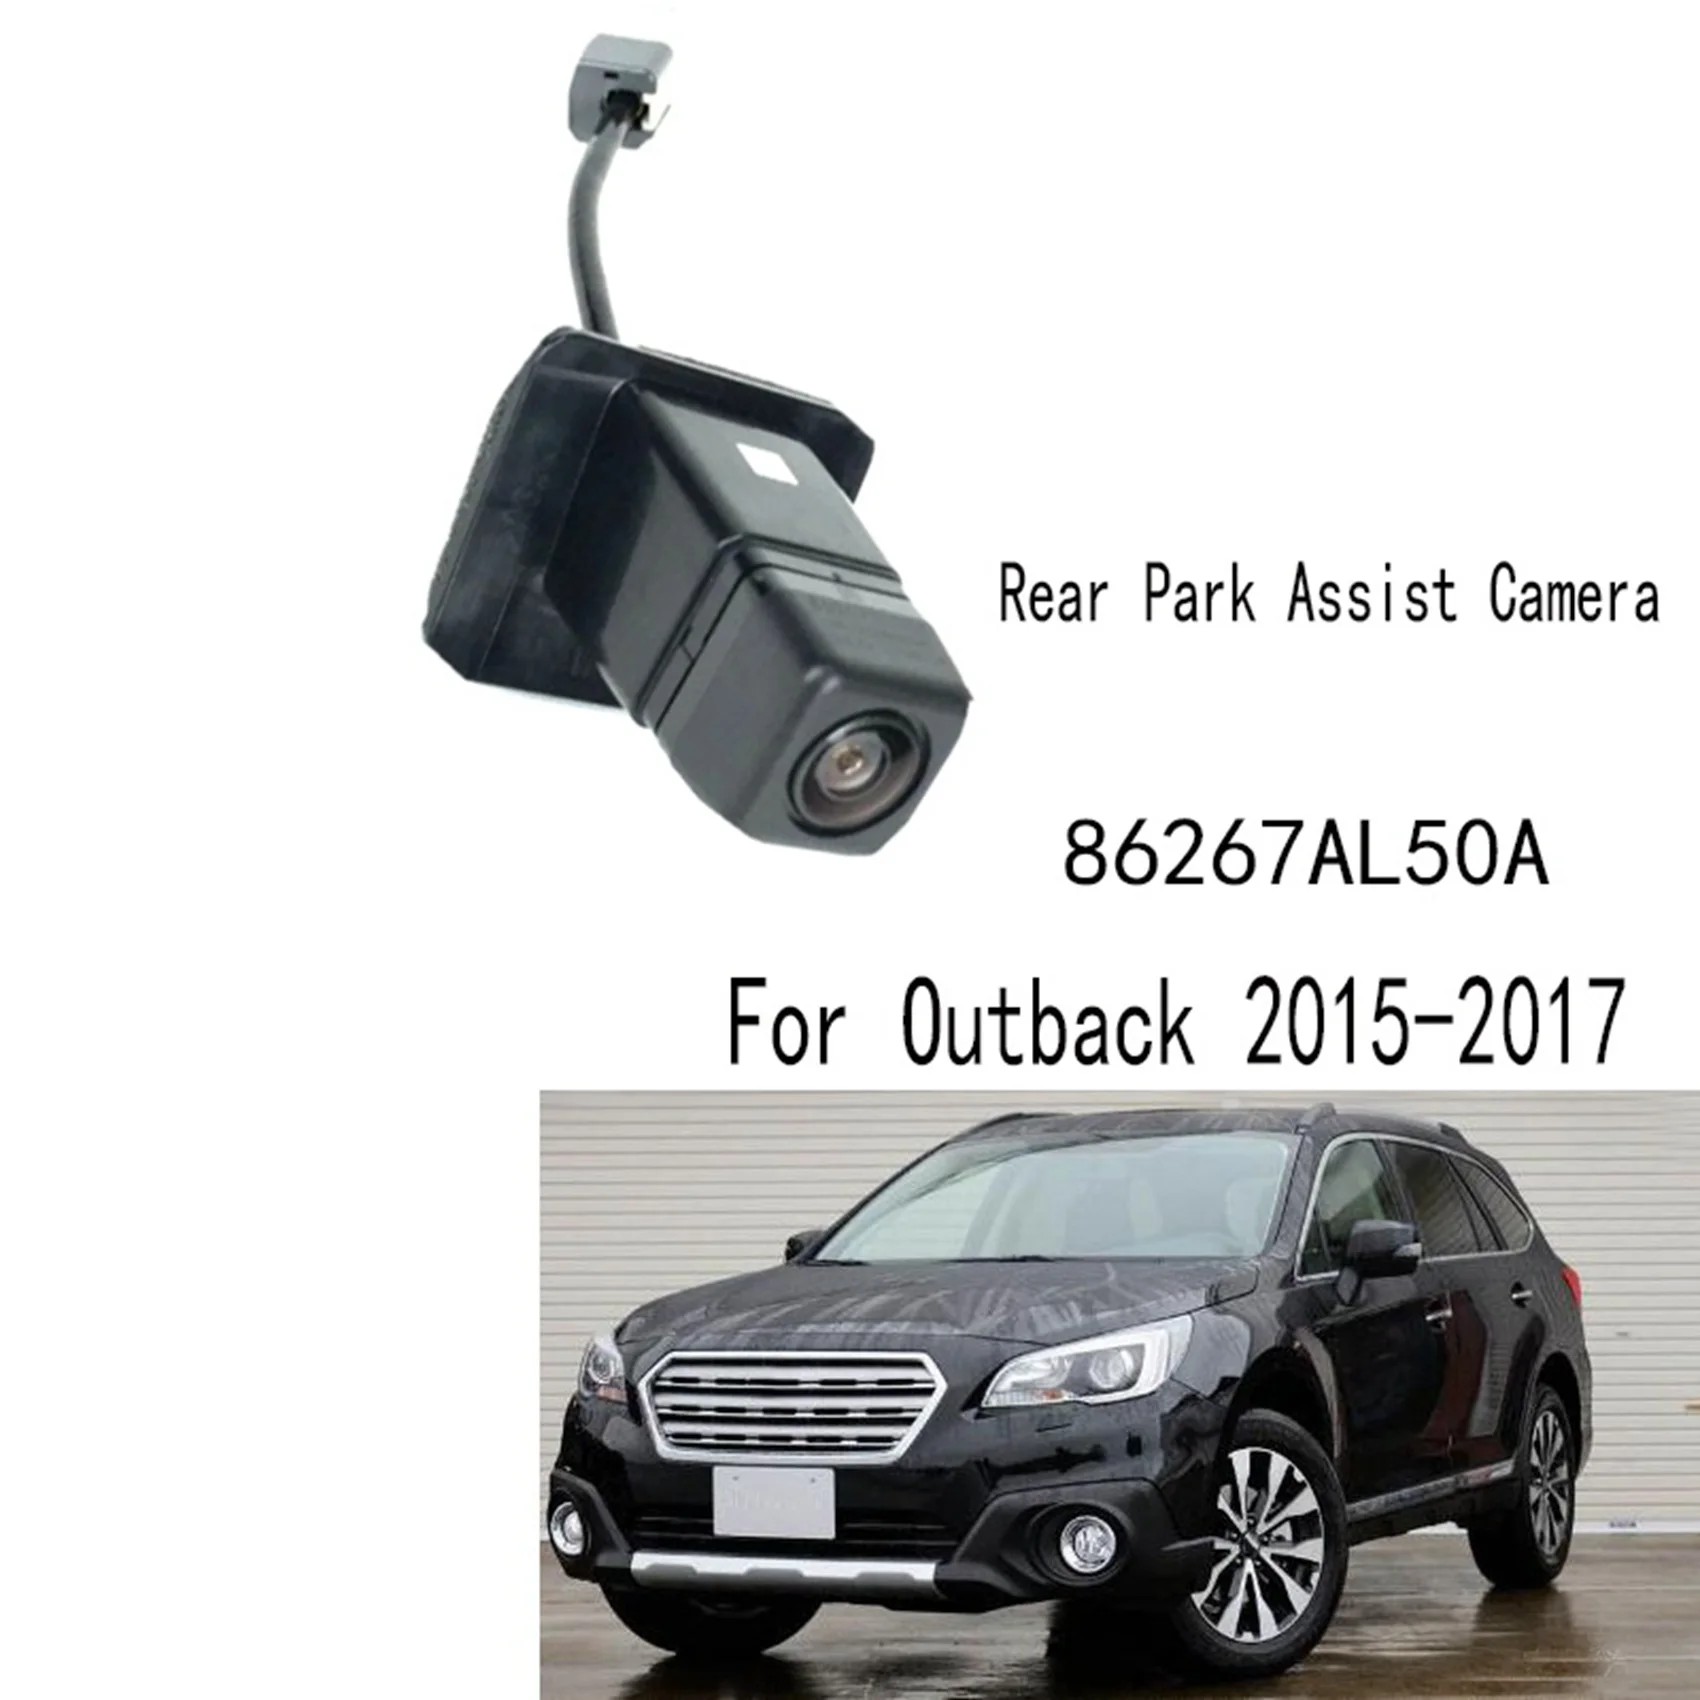 

Rear Hatch Back Up Camera Rear Park Assist Camera for Subaru Outback 2015-2017 86267AL50A